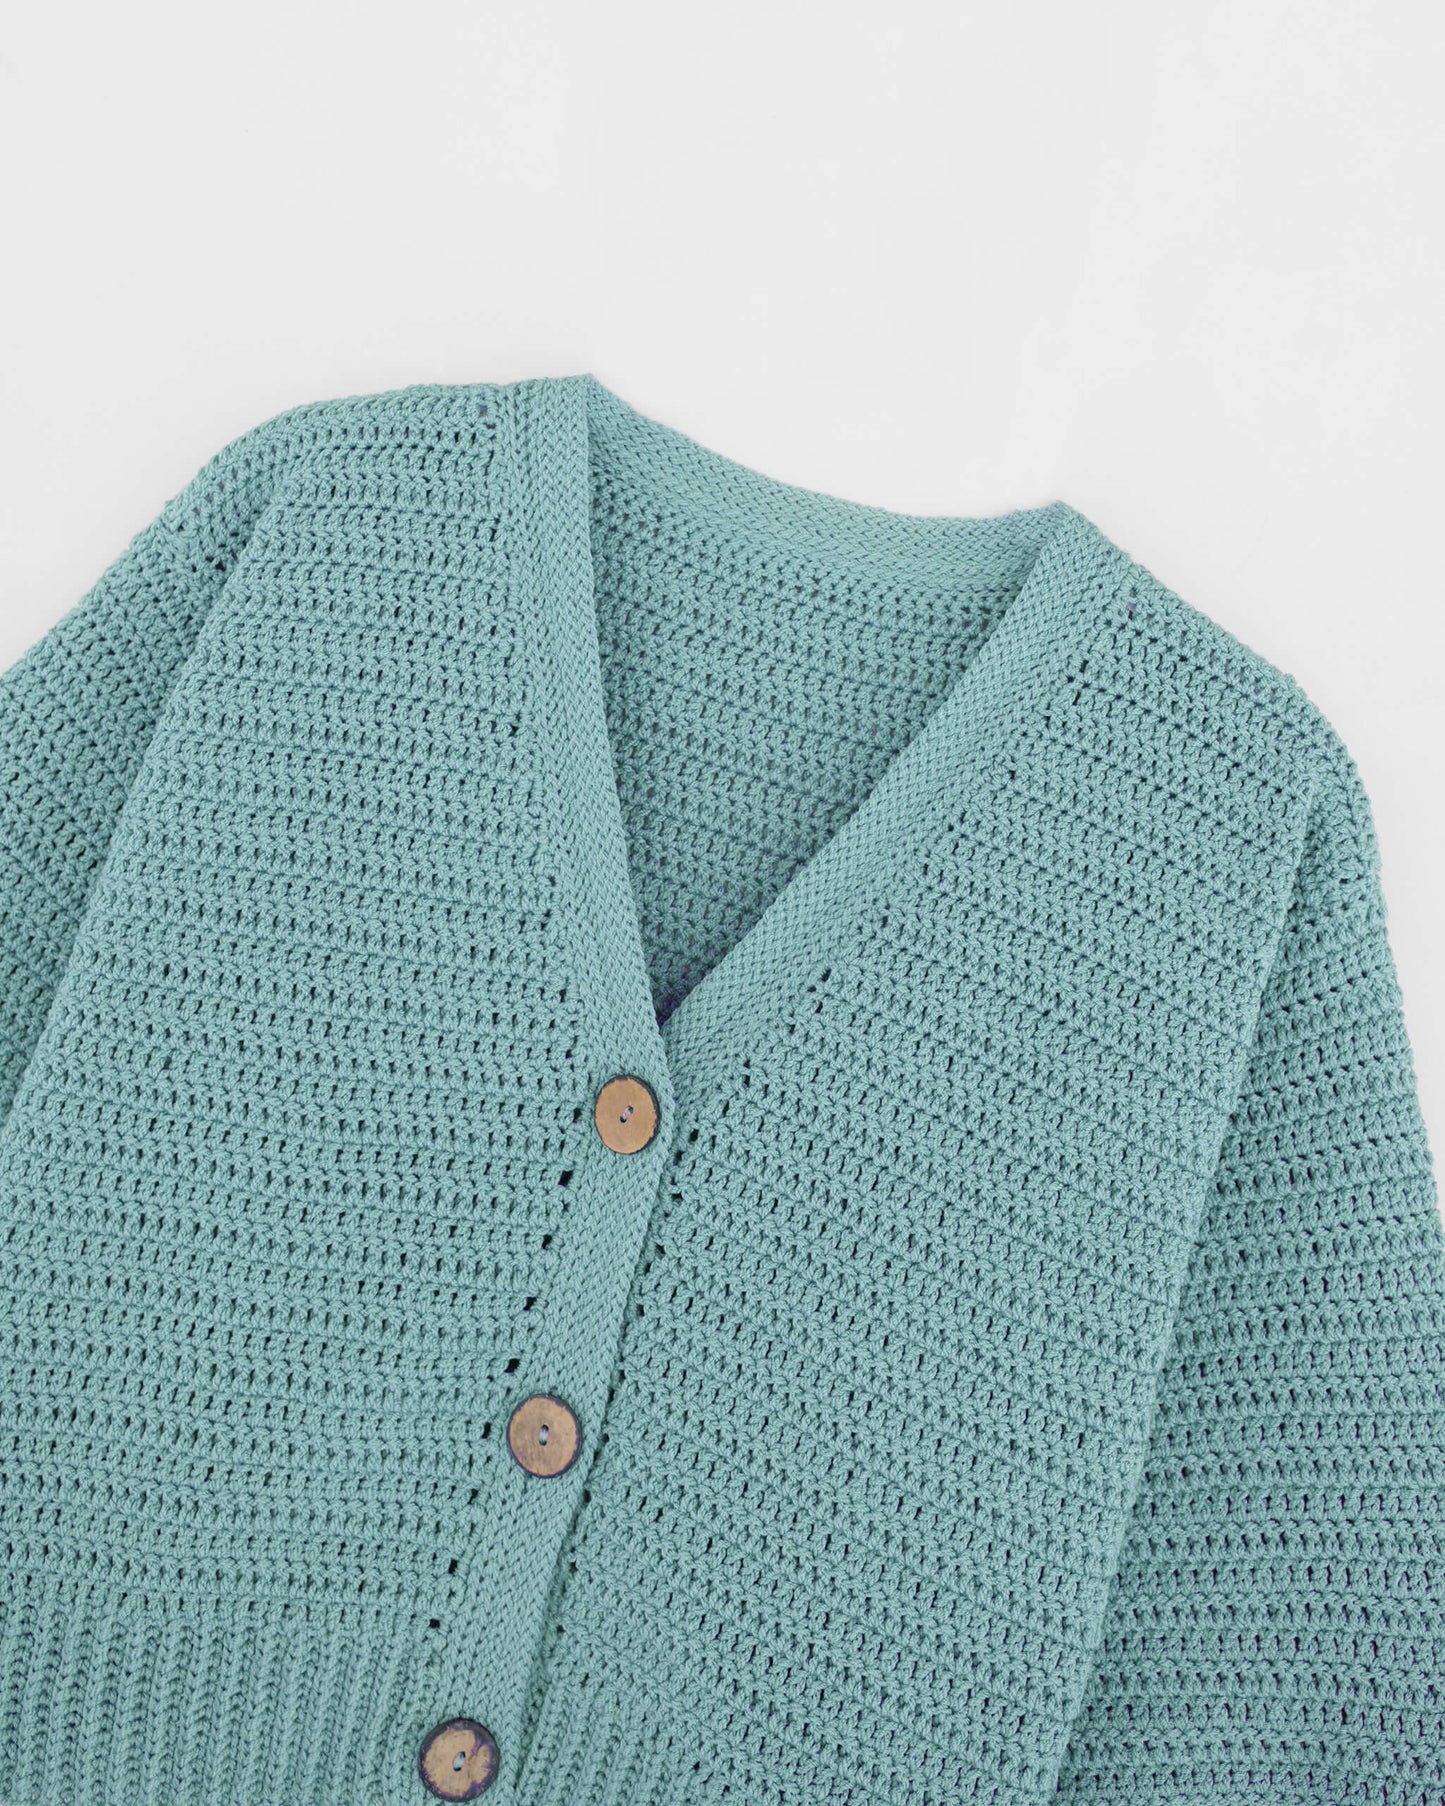 Crochet V-neck cardigan pattern